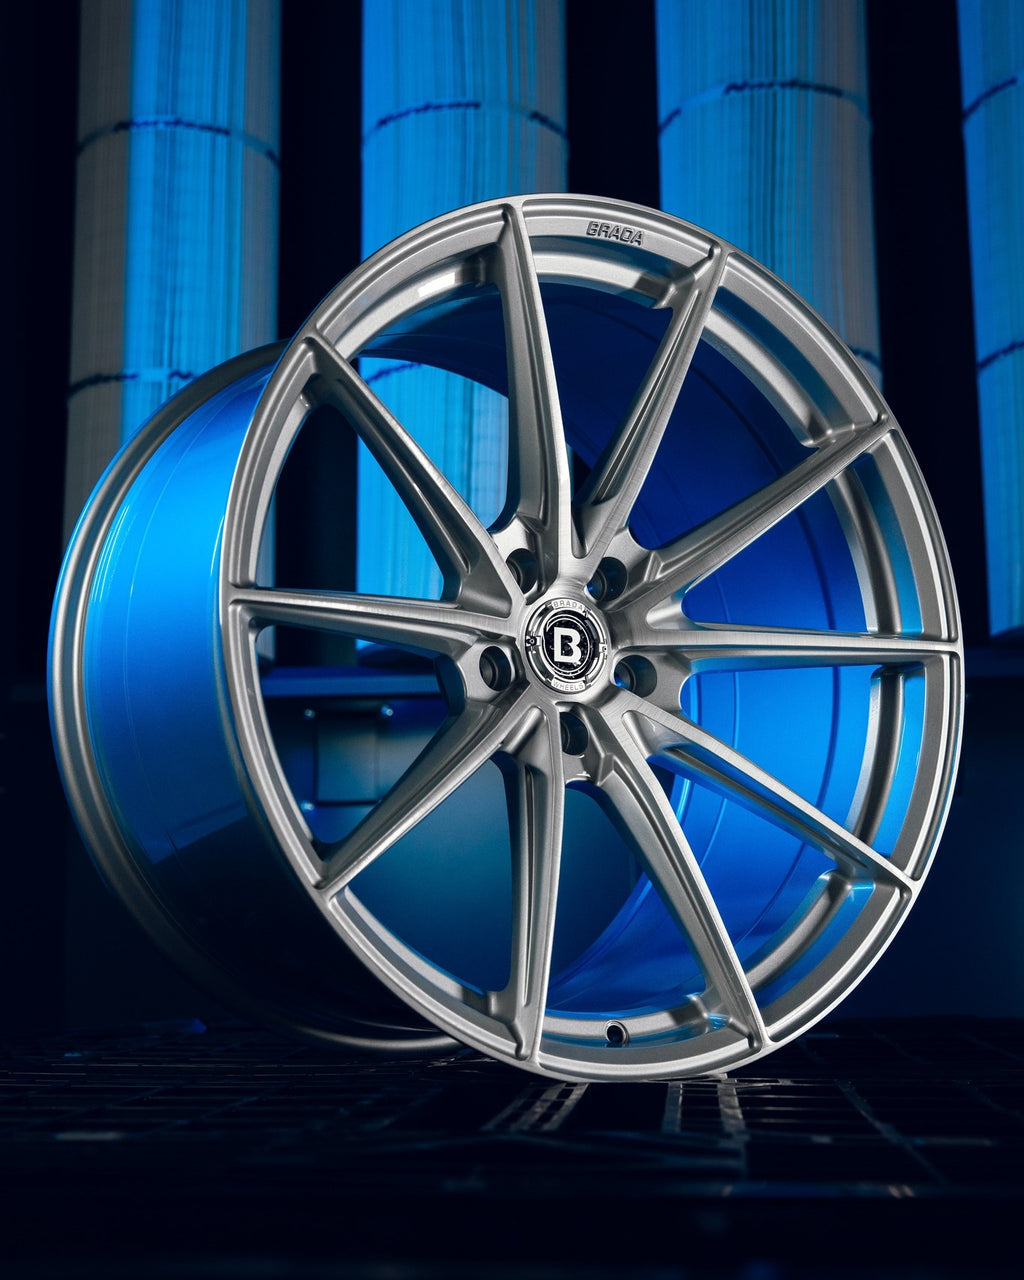 Brada - FormTech Line CX1 Hybrid Rotary Forged Wheel - Toyota